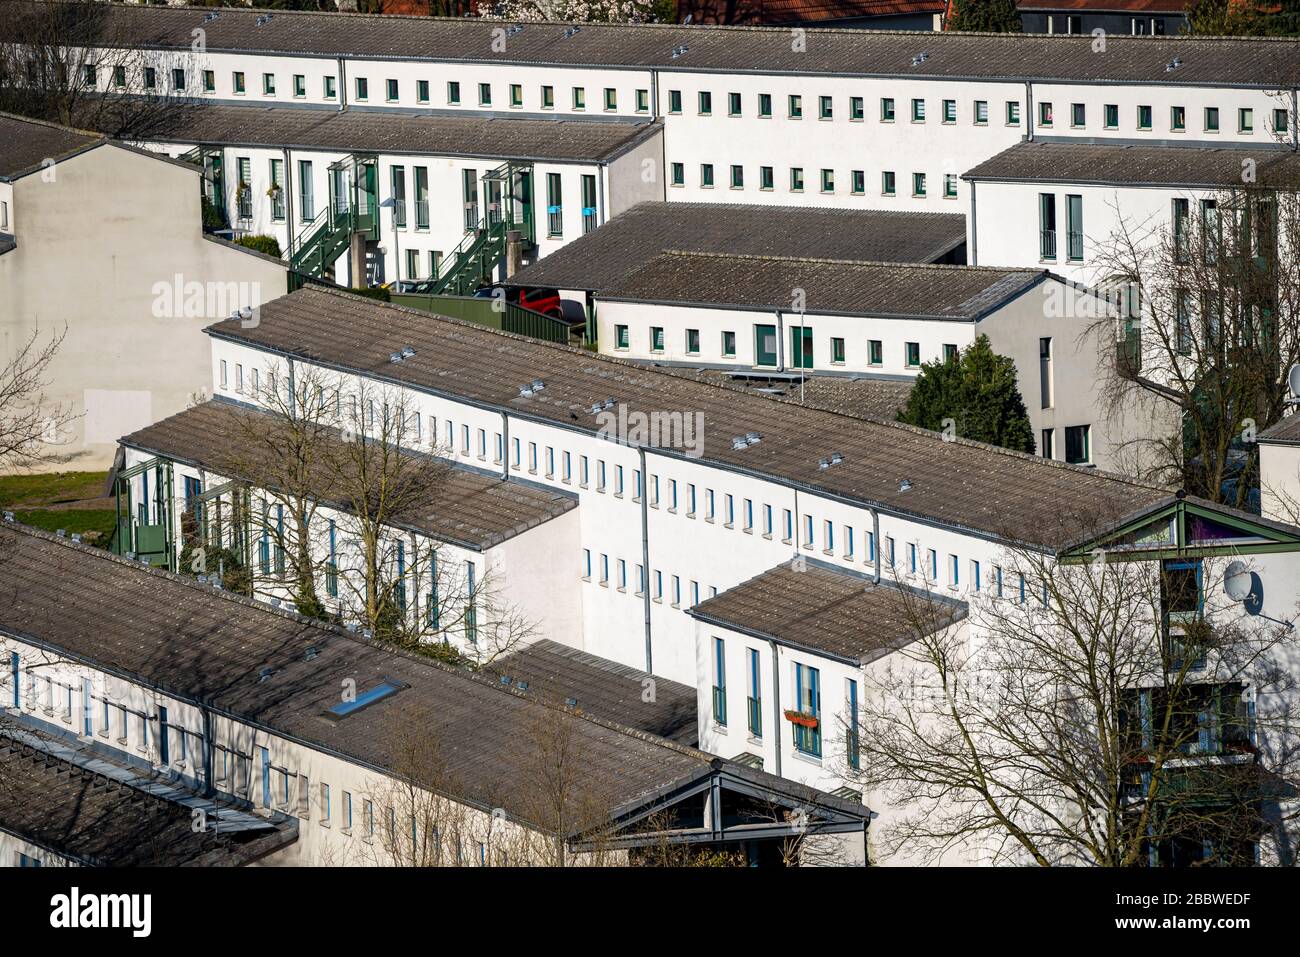 SchŸngelberg housing estate, new development, built in 1993 as part of the IBA, Gelsenkirchen, Germany Stock Photo